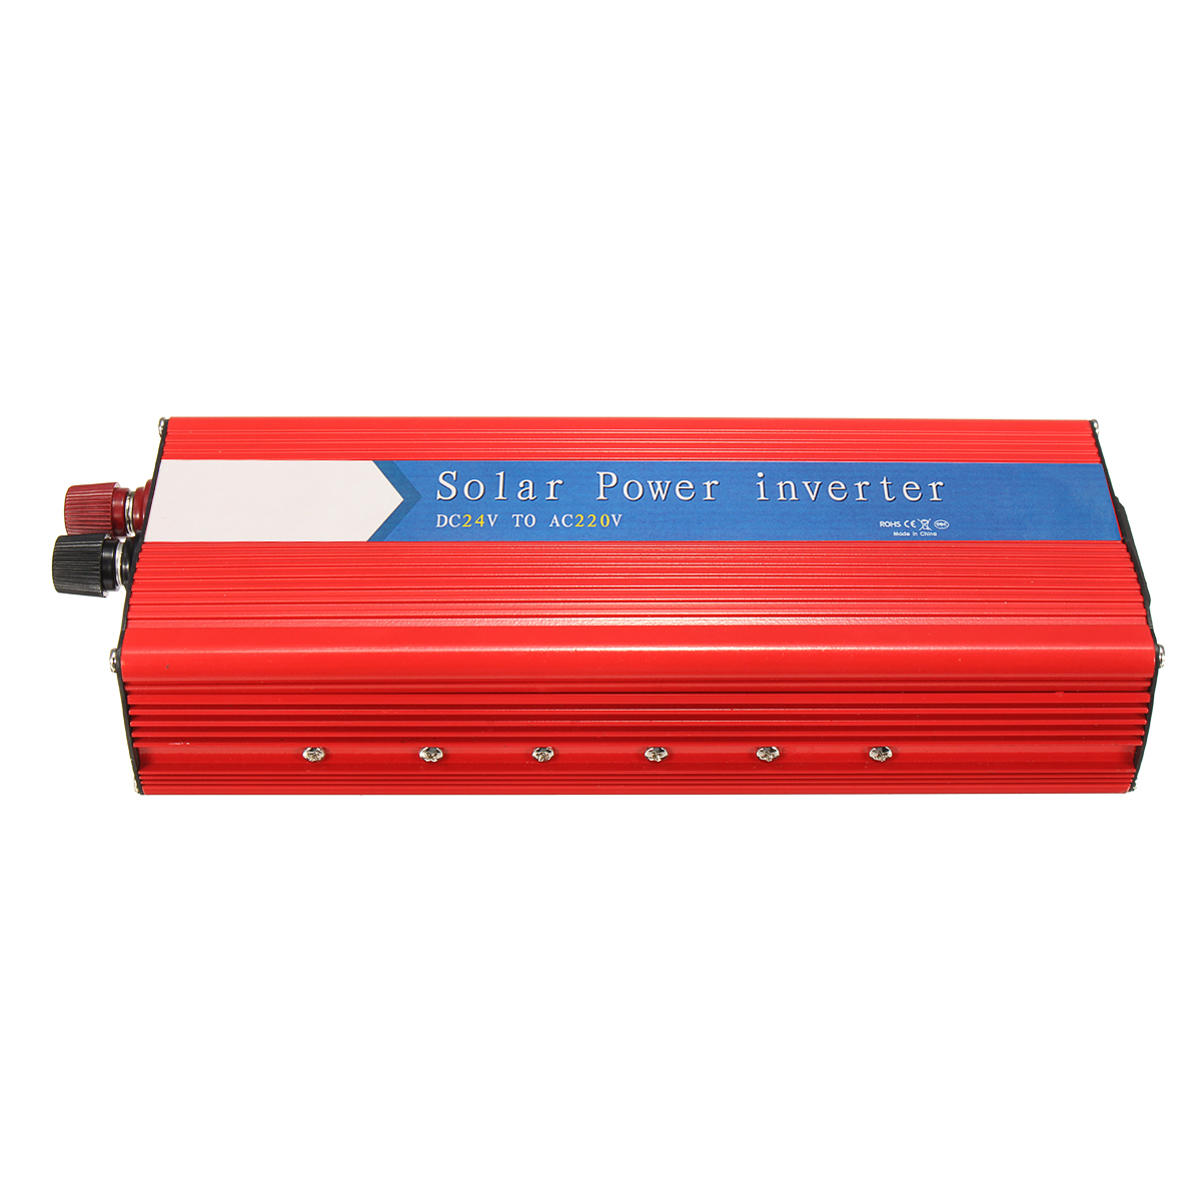 Professional 6000W Solar Power Inverter DC 24V to AC 220V LED Display Car Sine Wave Converter for Household Appliances Red